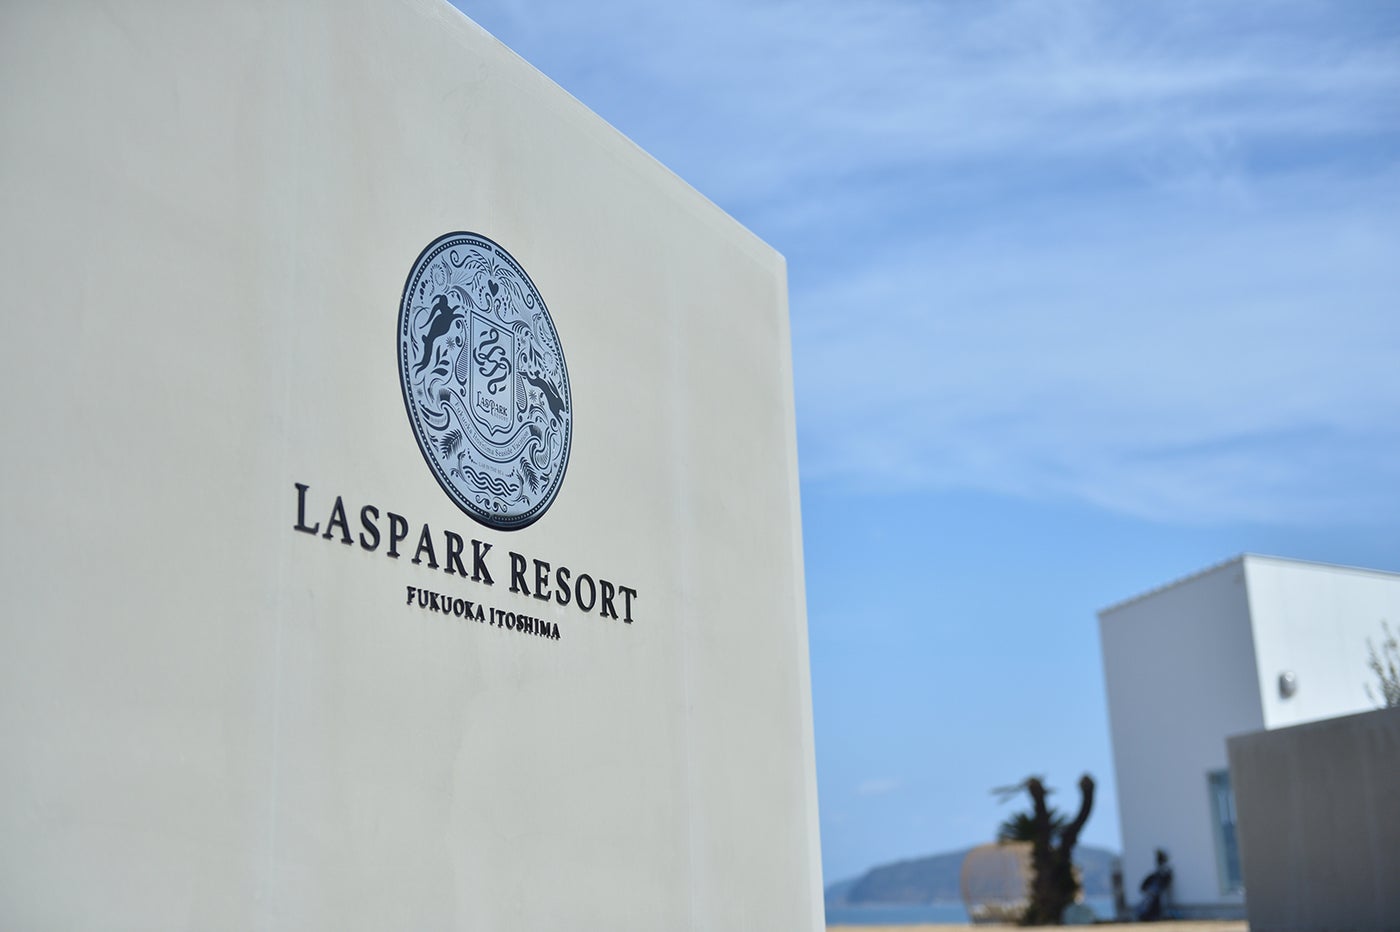 LASPARK RESORT／画像提供：Wiリゾート